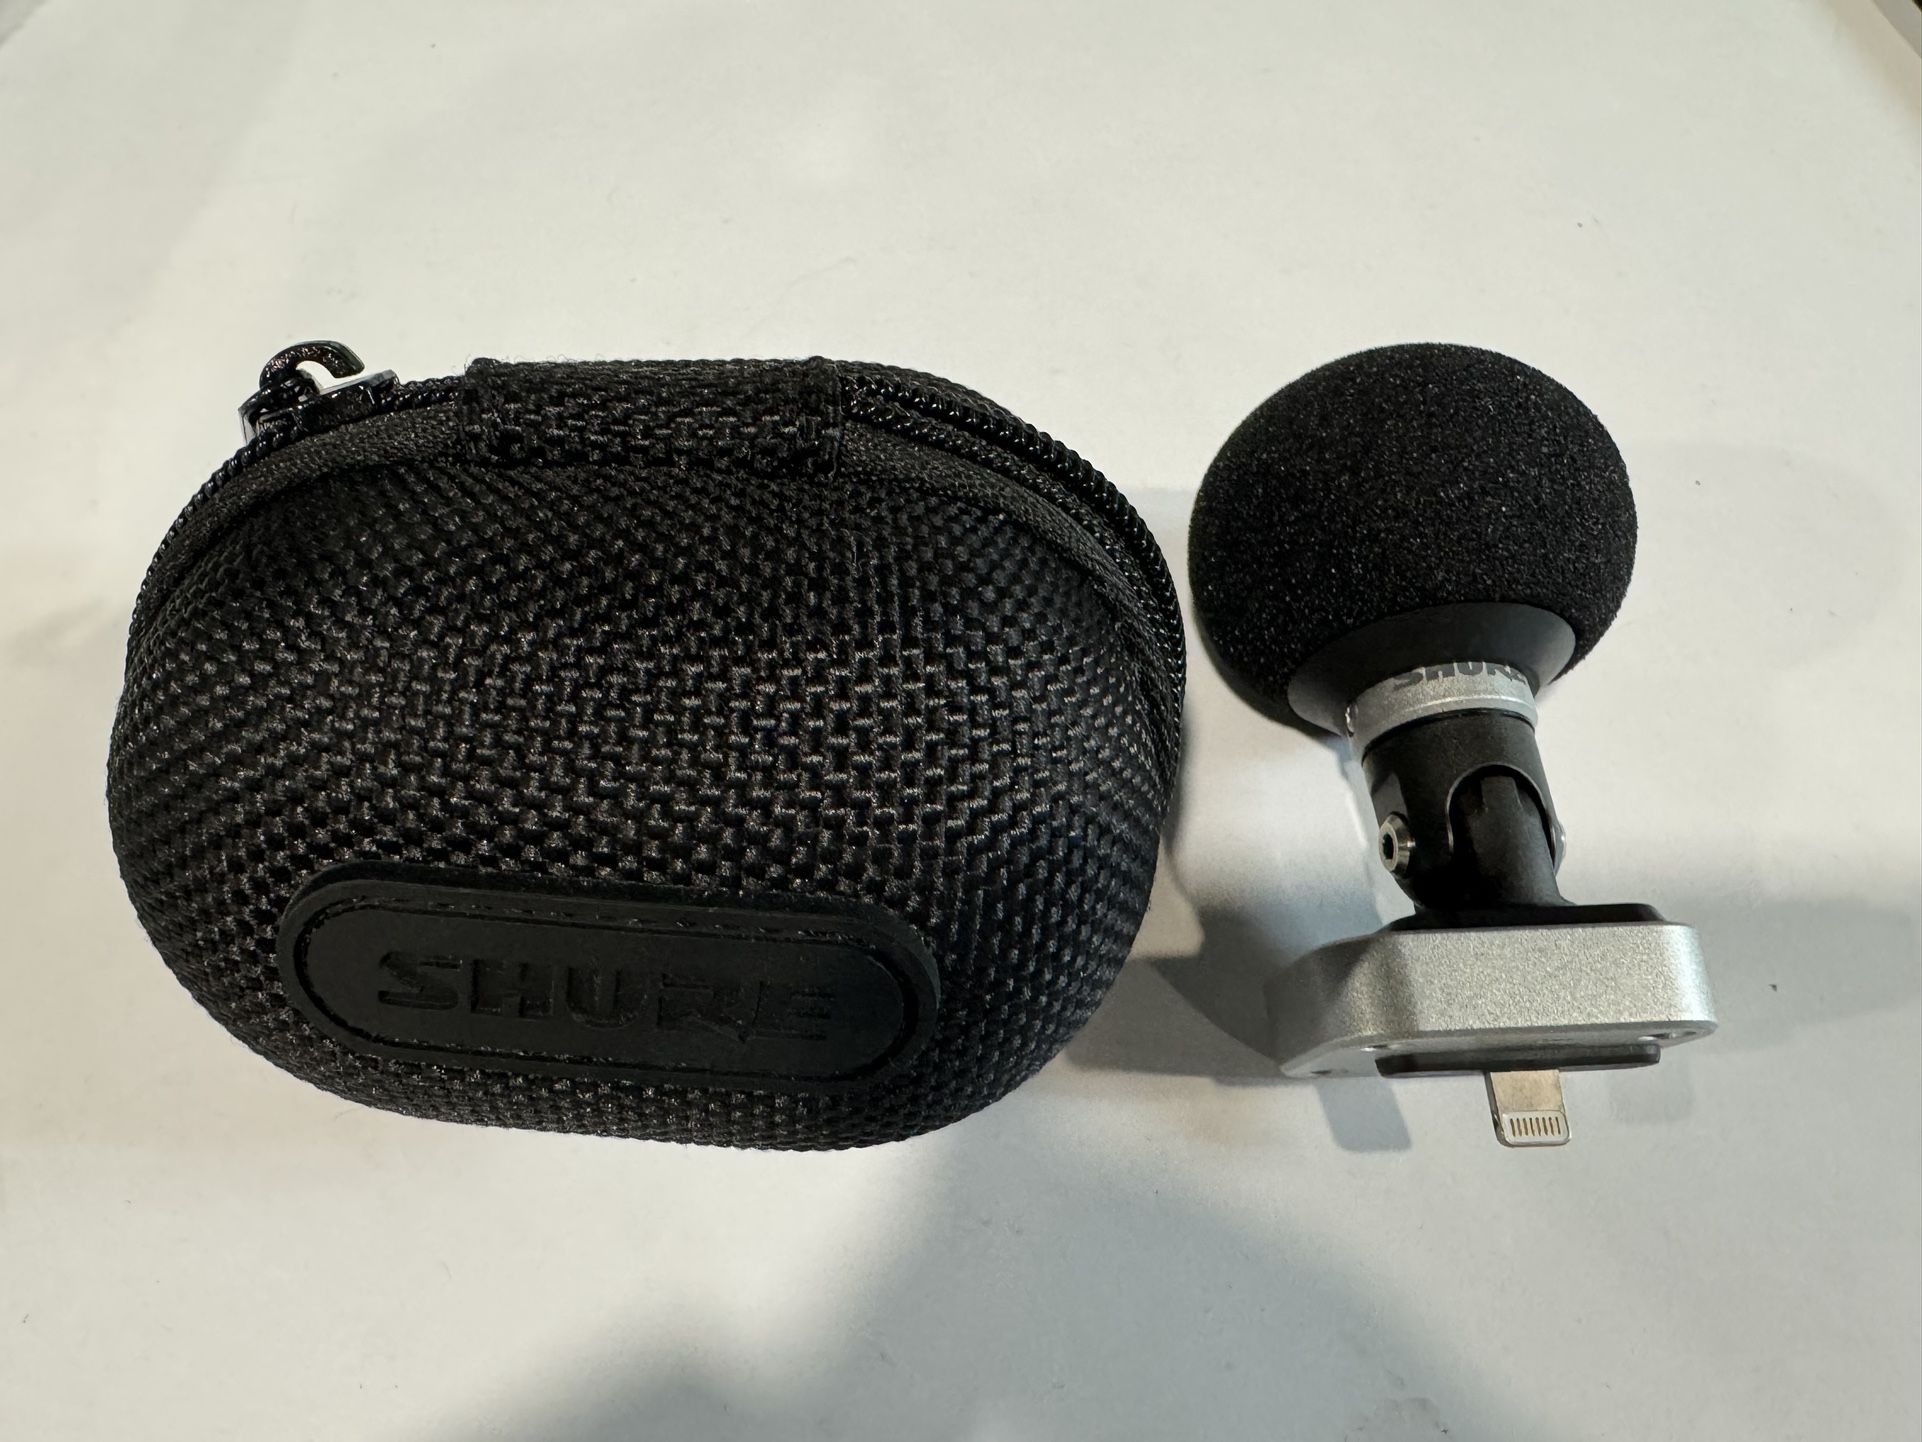 Shure MV88 Lightning Port Microphone For Iphone/Ipad